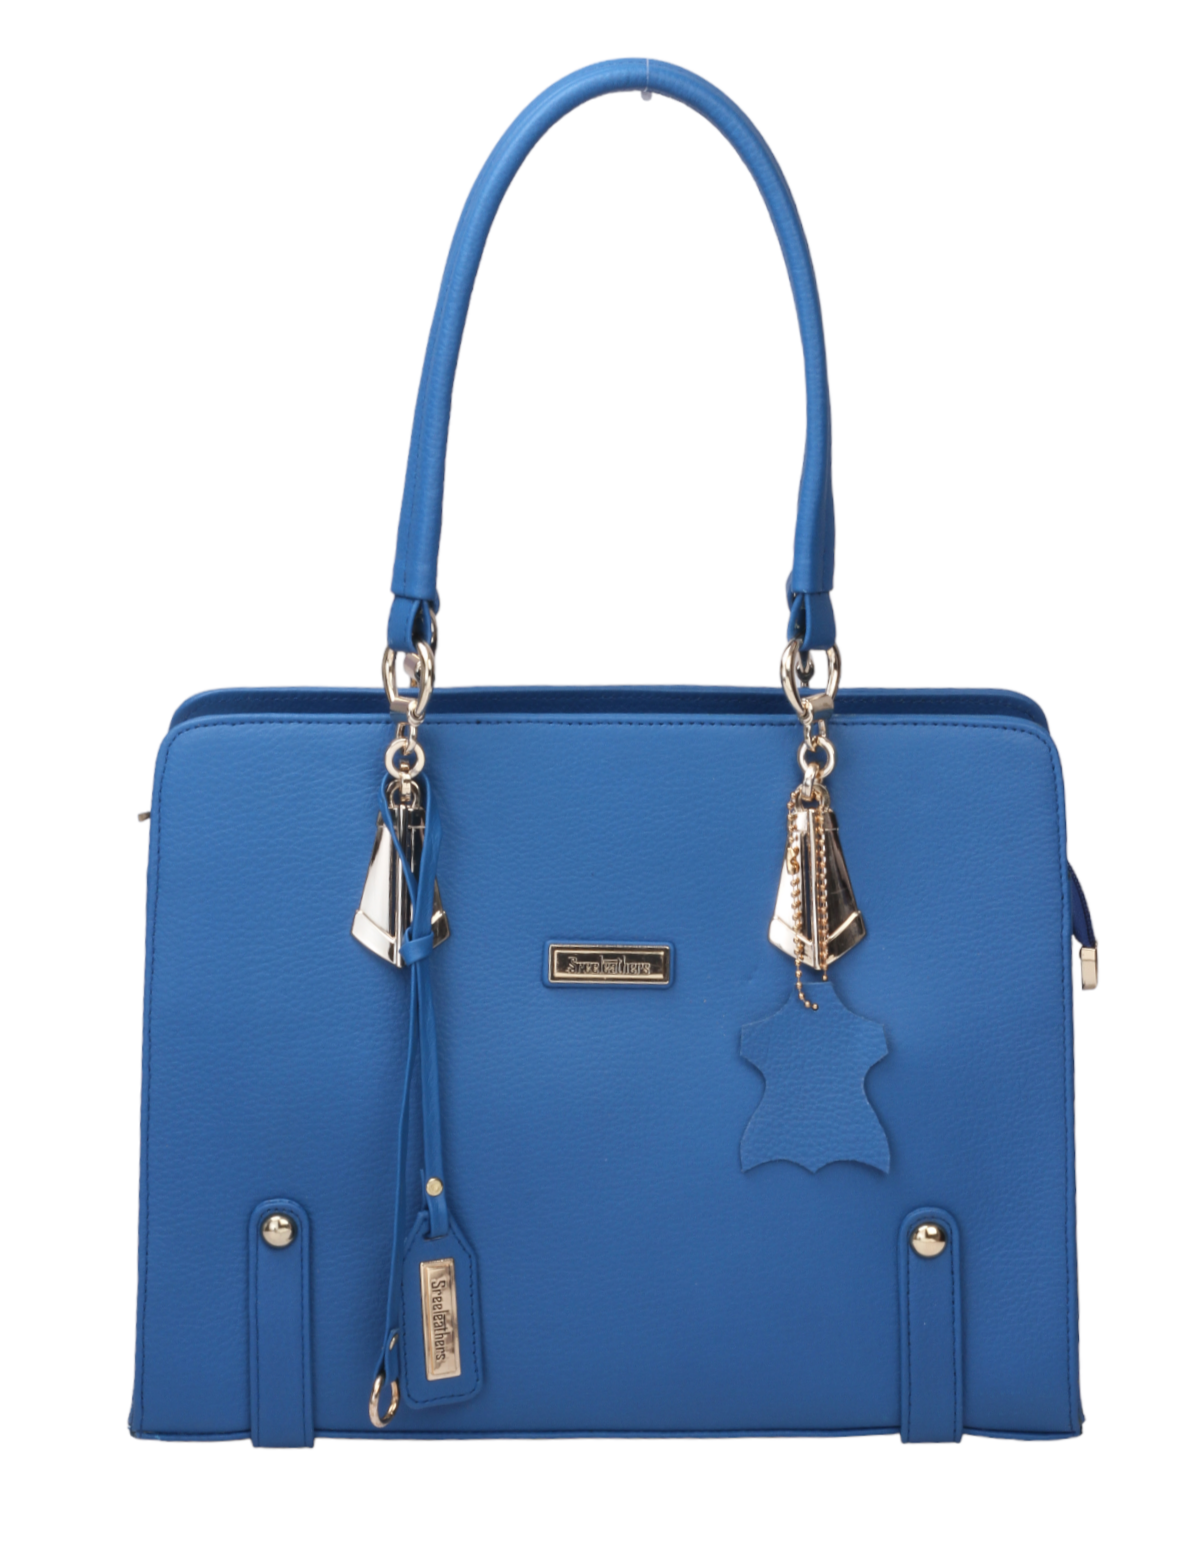 Shree Leathers Bags Handbags - Buy Shree Leathers Bags Handbags online in  India